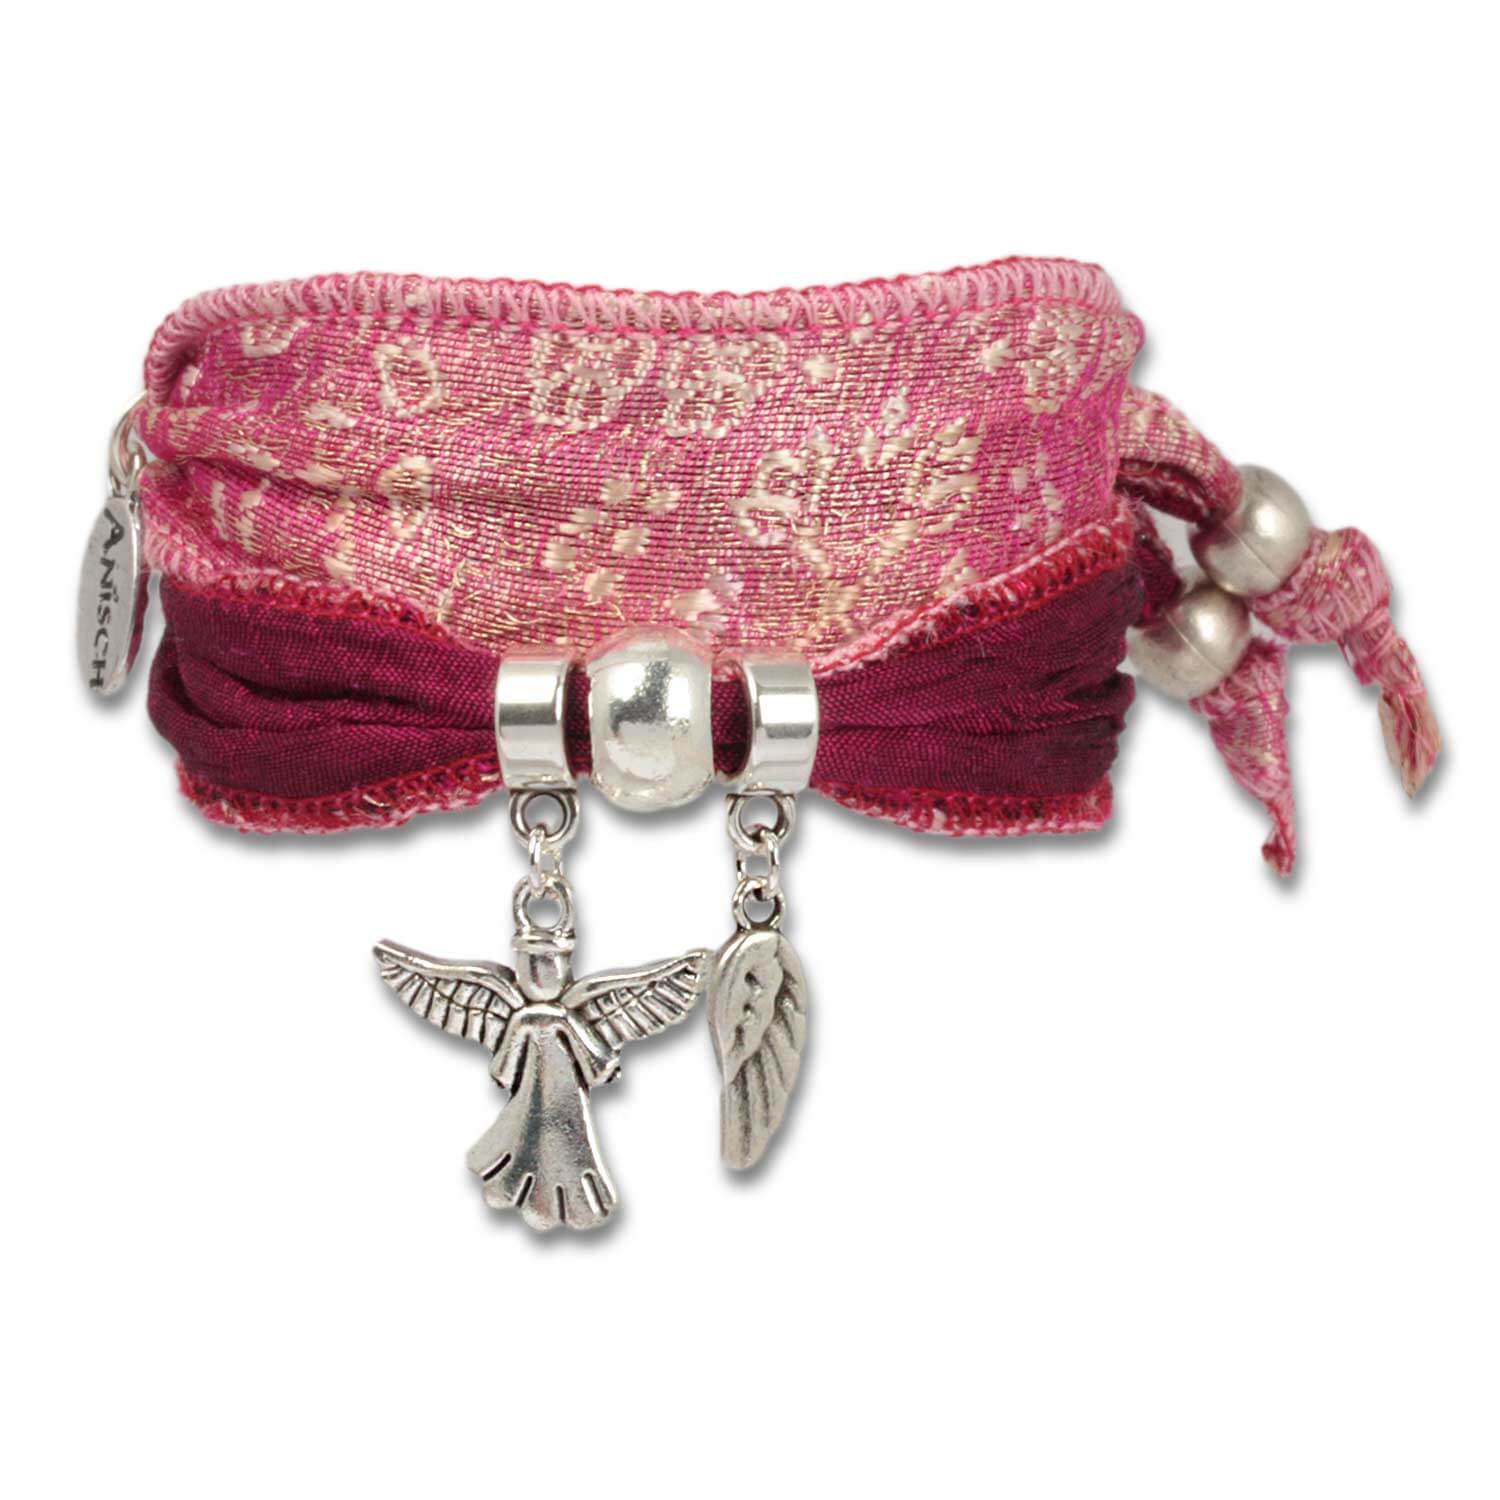 Pink Sangria - Wings of Hope Armband aus indischen Saris